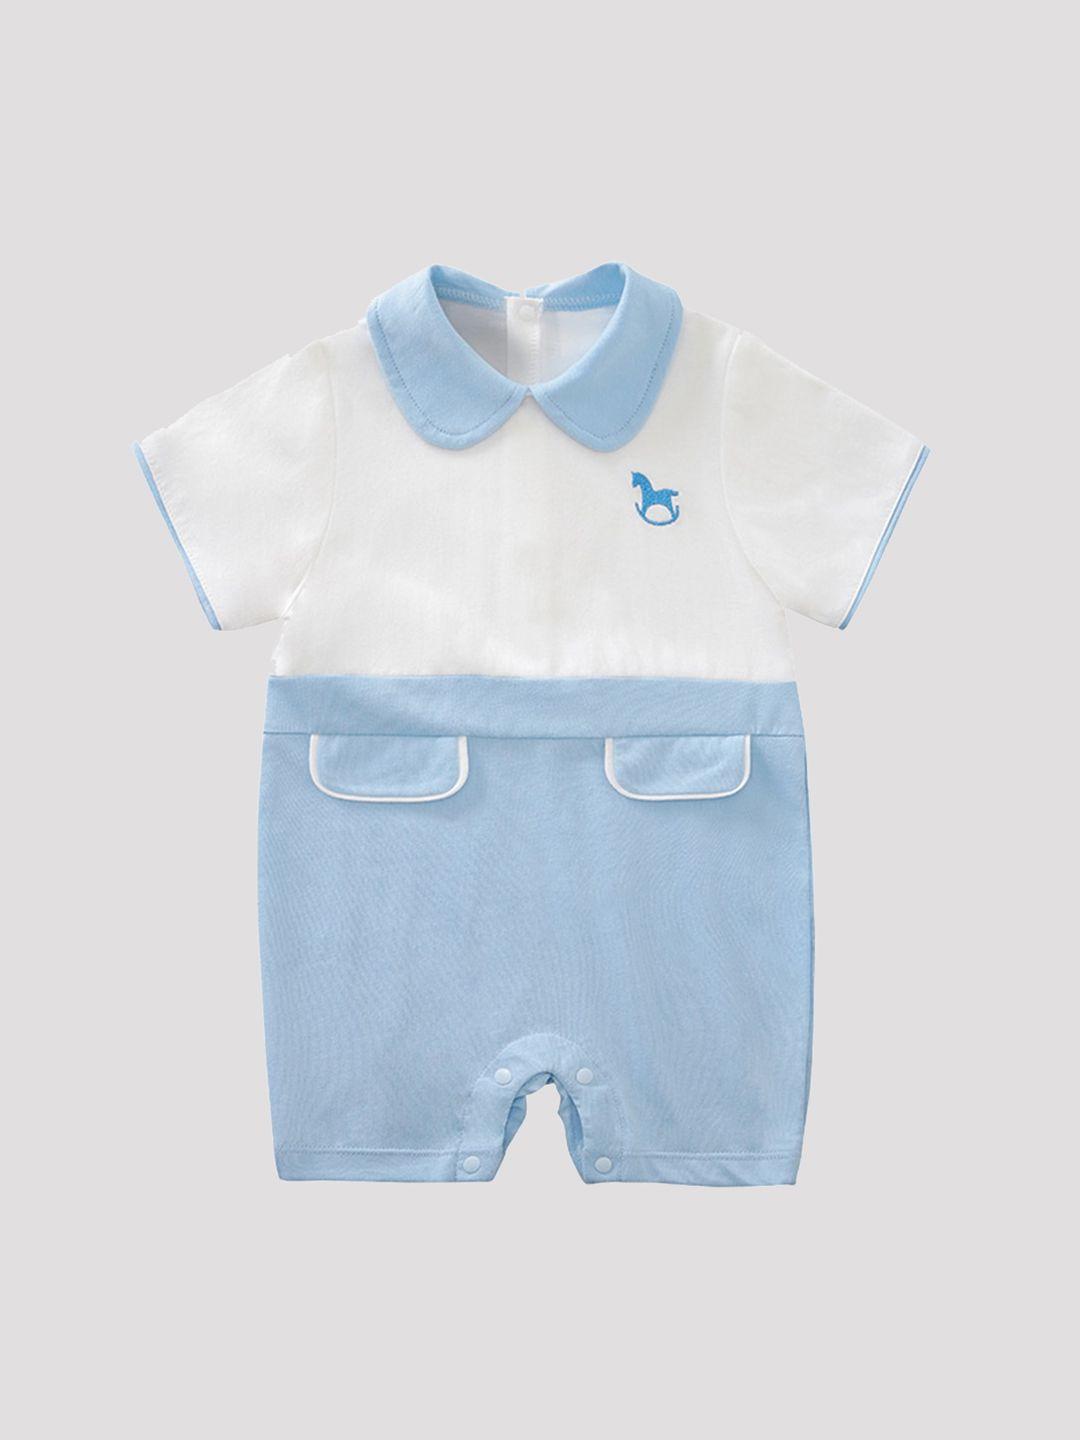 stylecast  infant boys blue white colourblocked cotton rompers